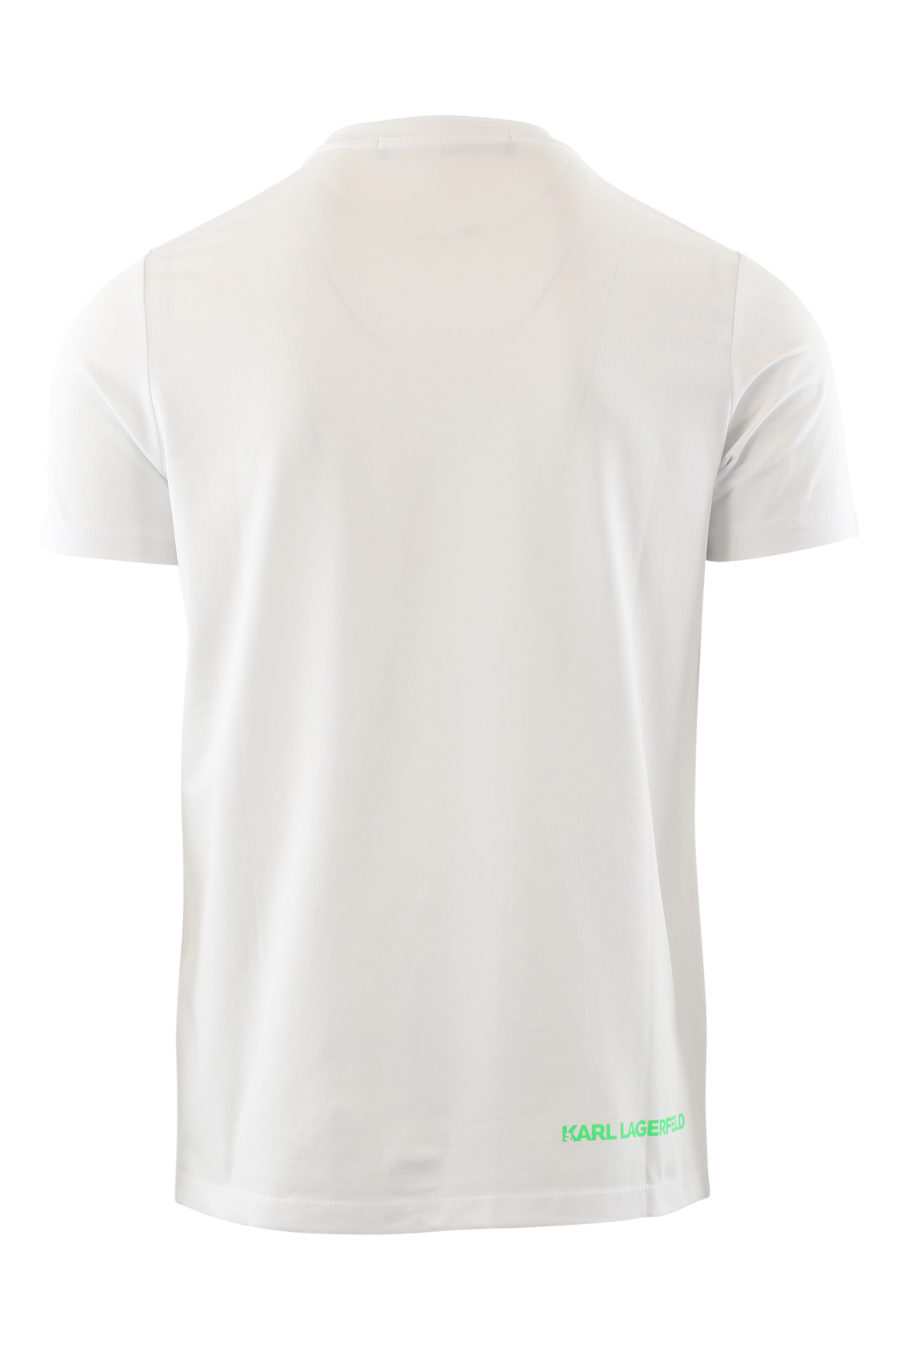 Camiseta blanca con logo "rue st-guillaume" multicolor - IMG 6521